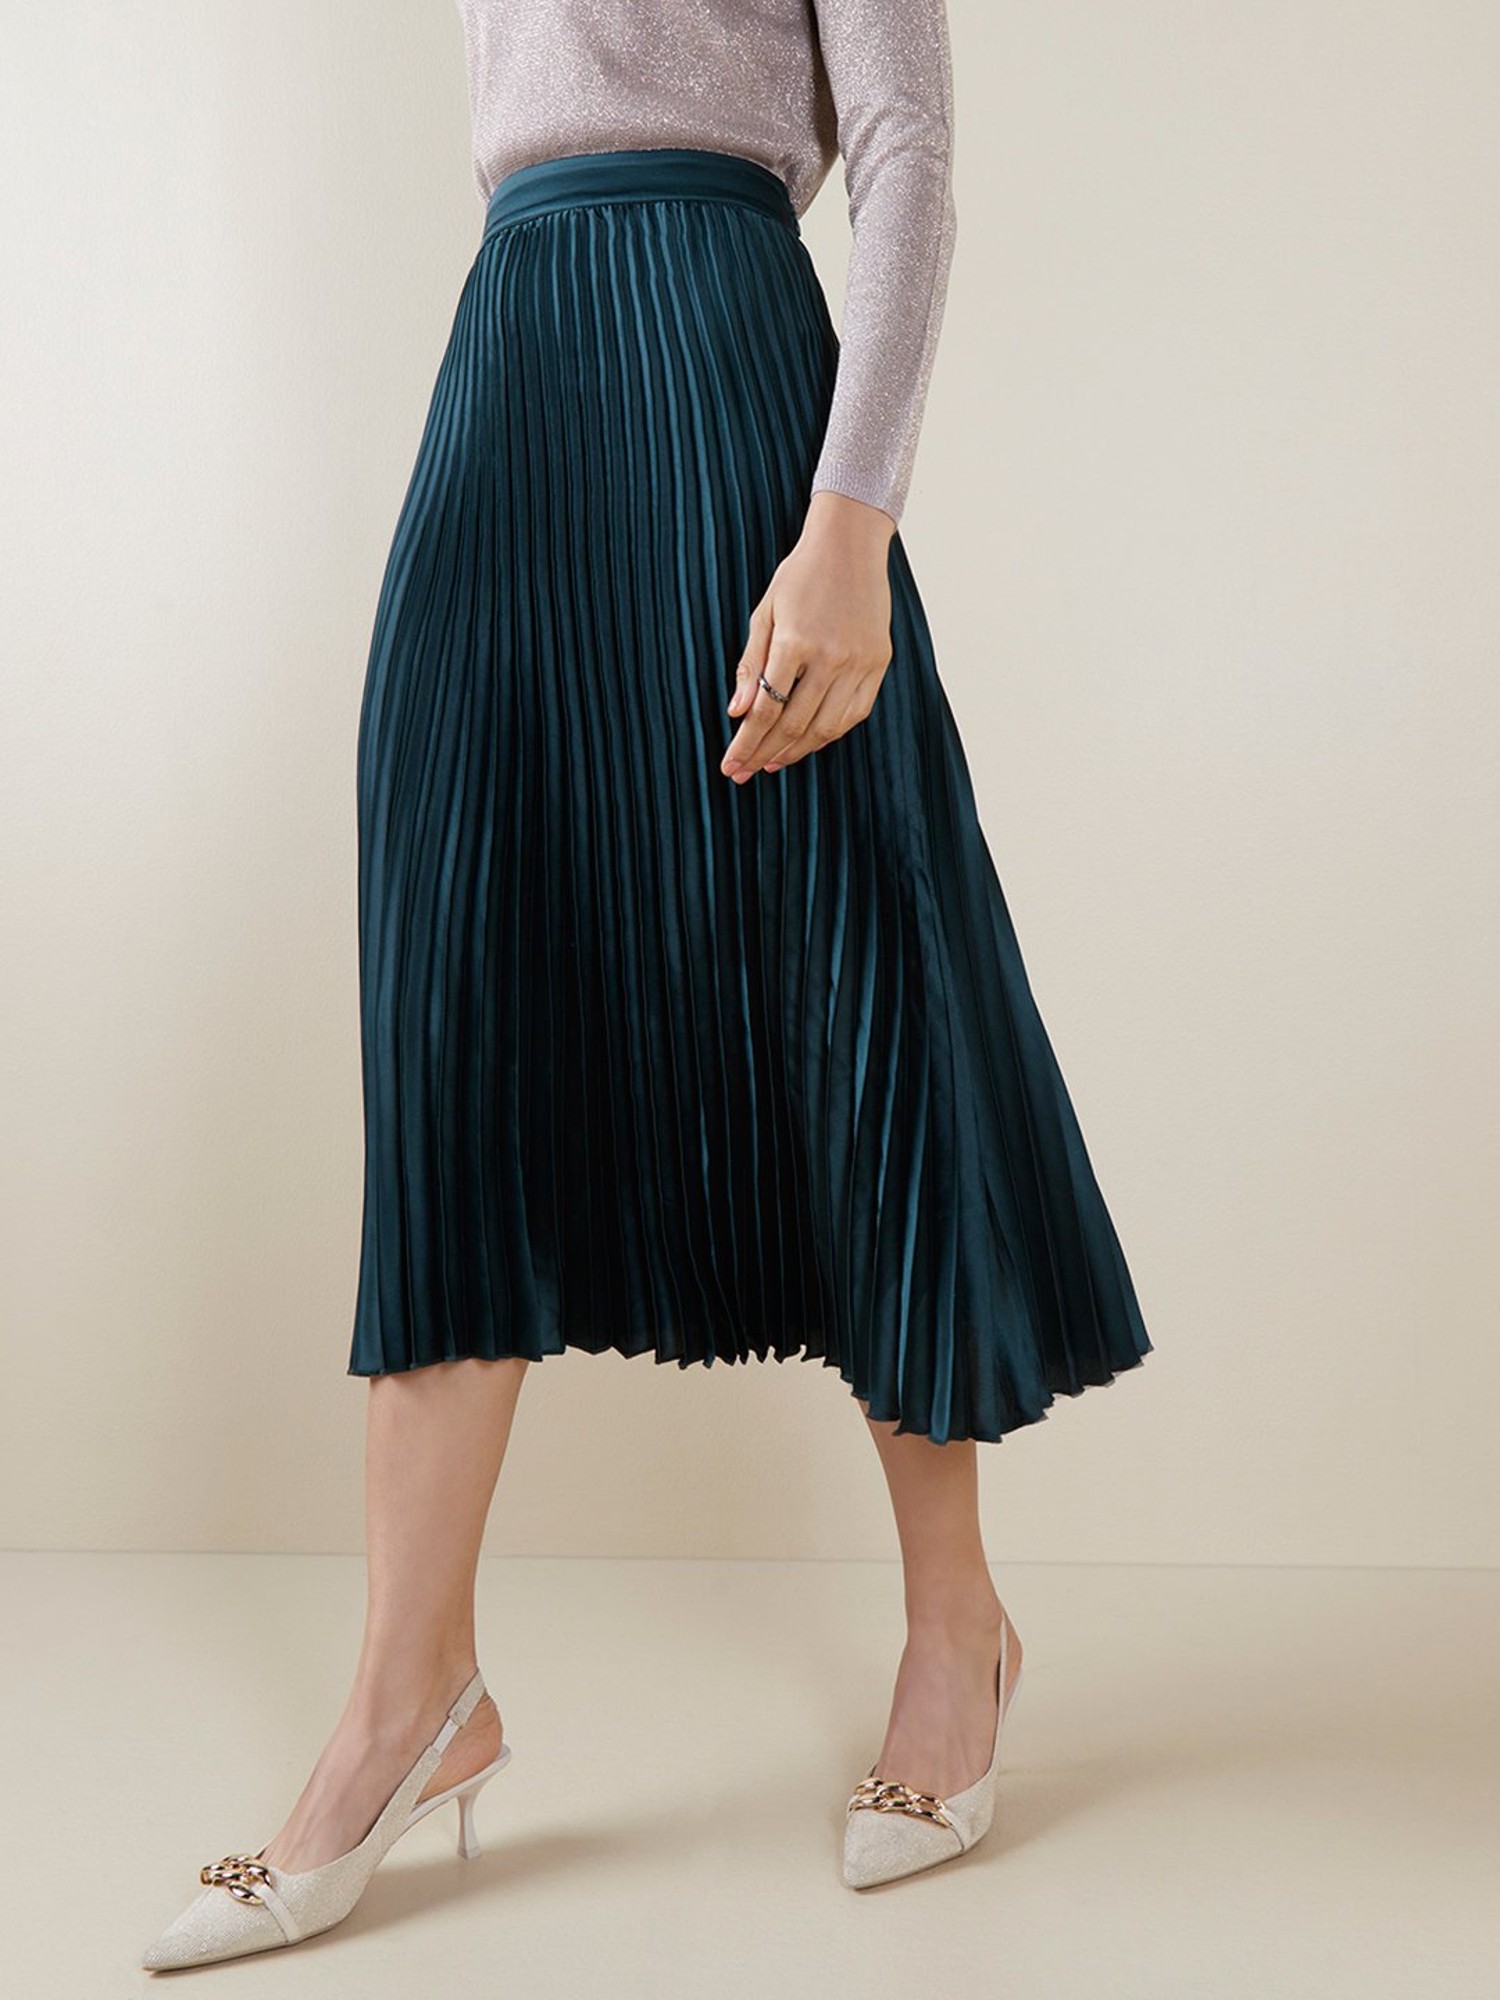 Discover 67+ dark green pleated skirt latest